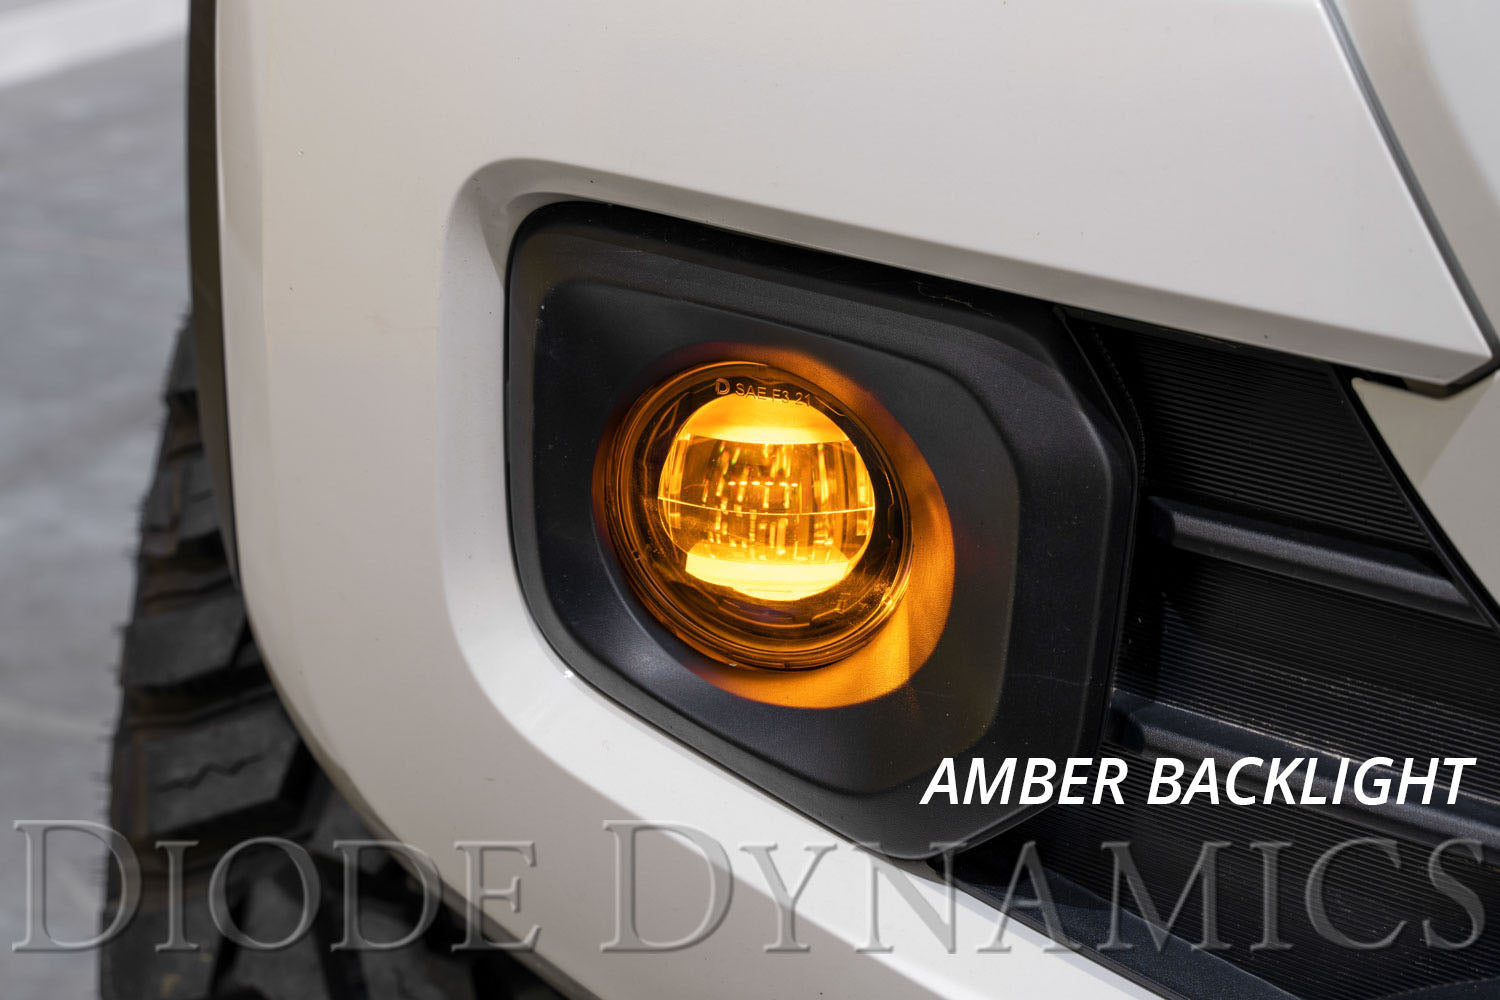 Elite Series Fog Lamps for 2014-2022 Toyota Highlander Pair Cool White 6000K Diode Dynamics